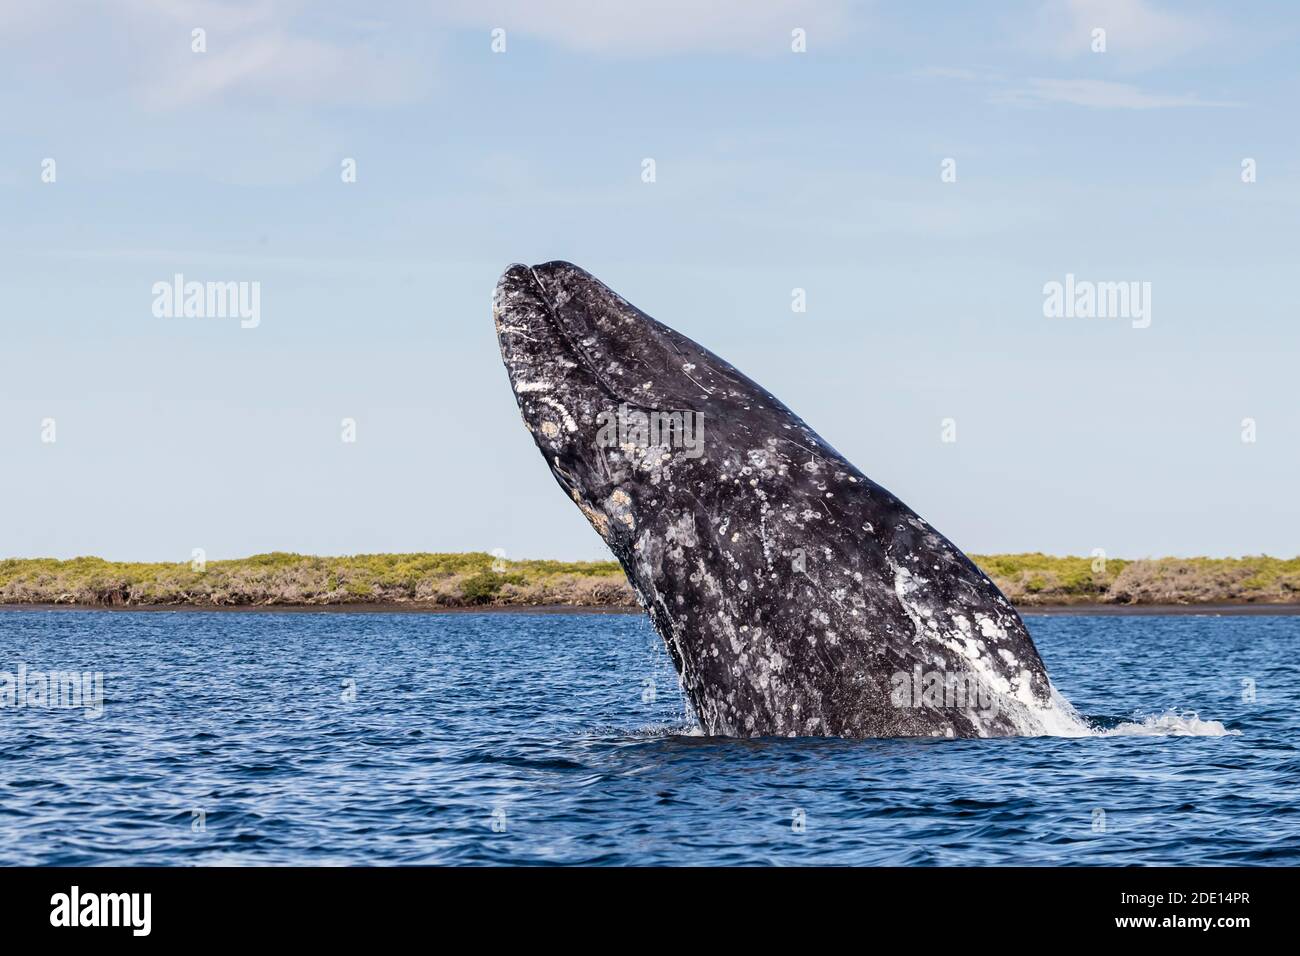 Adult California gray whale (Eschrichtius robustus) breaching in San Ignacio Lagoon, Baja California Sur, Mexico, North America Stock Photo